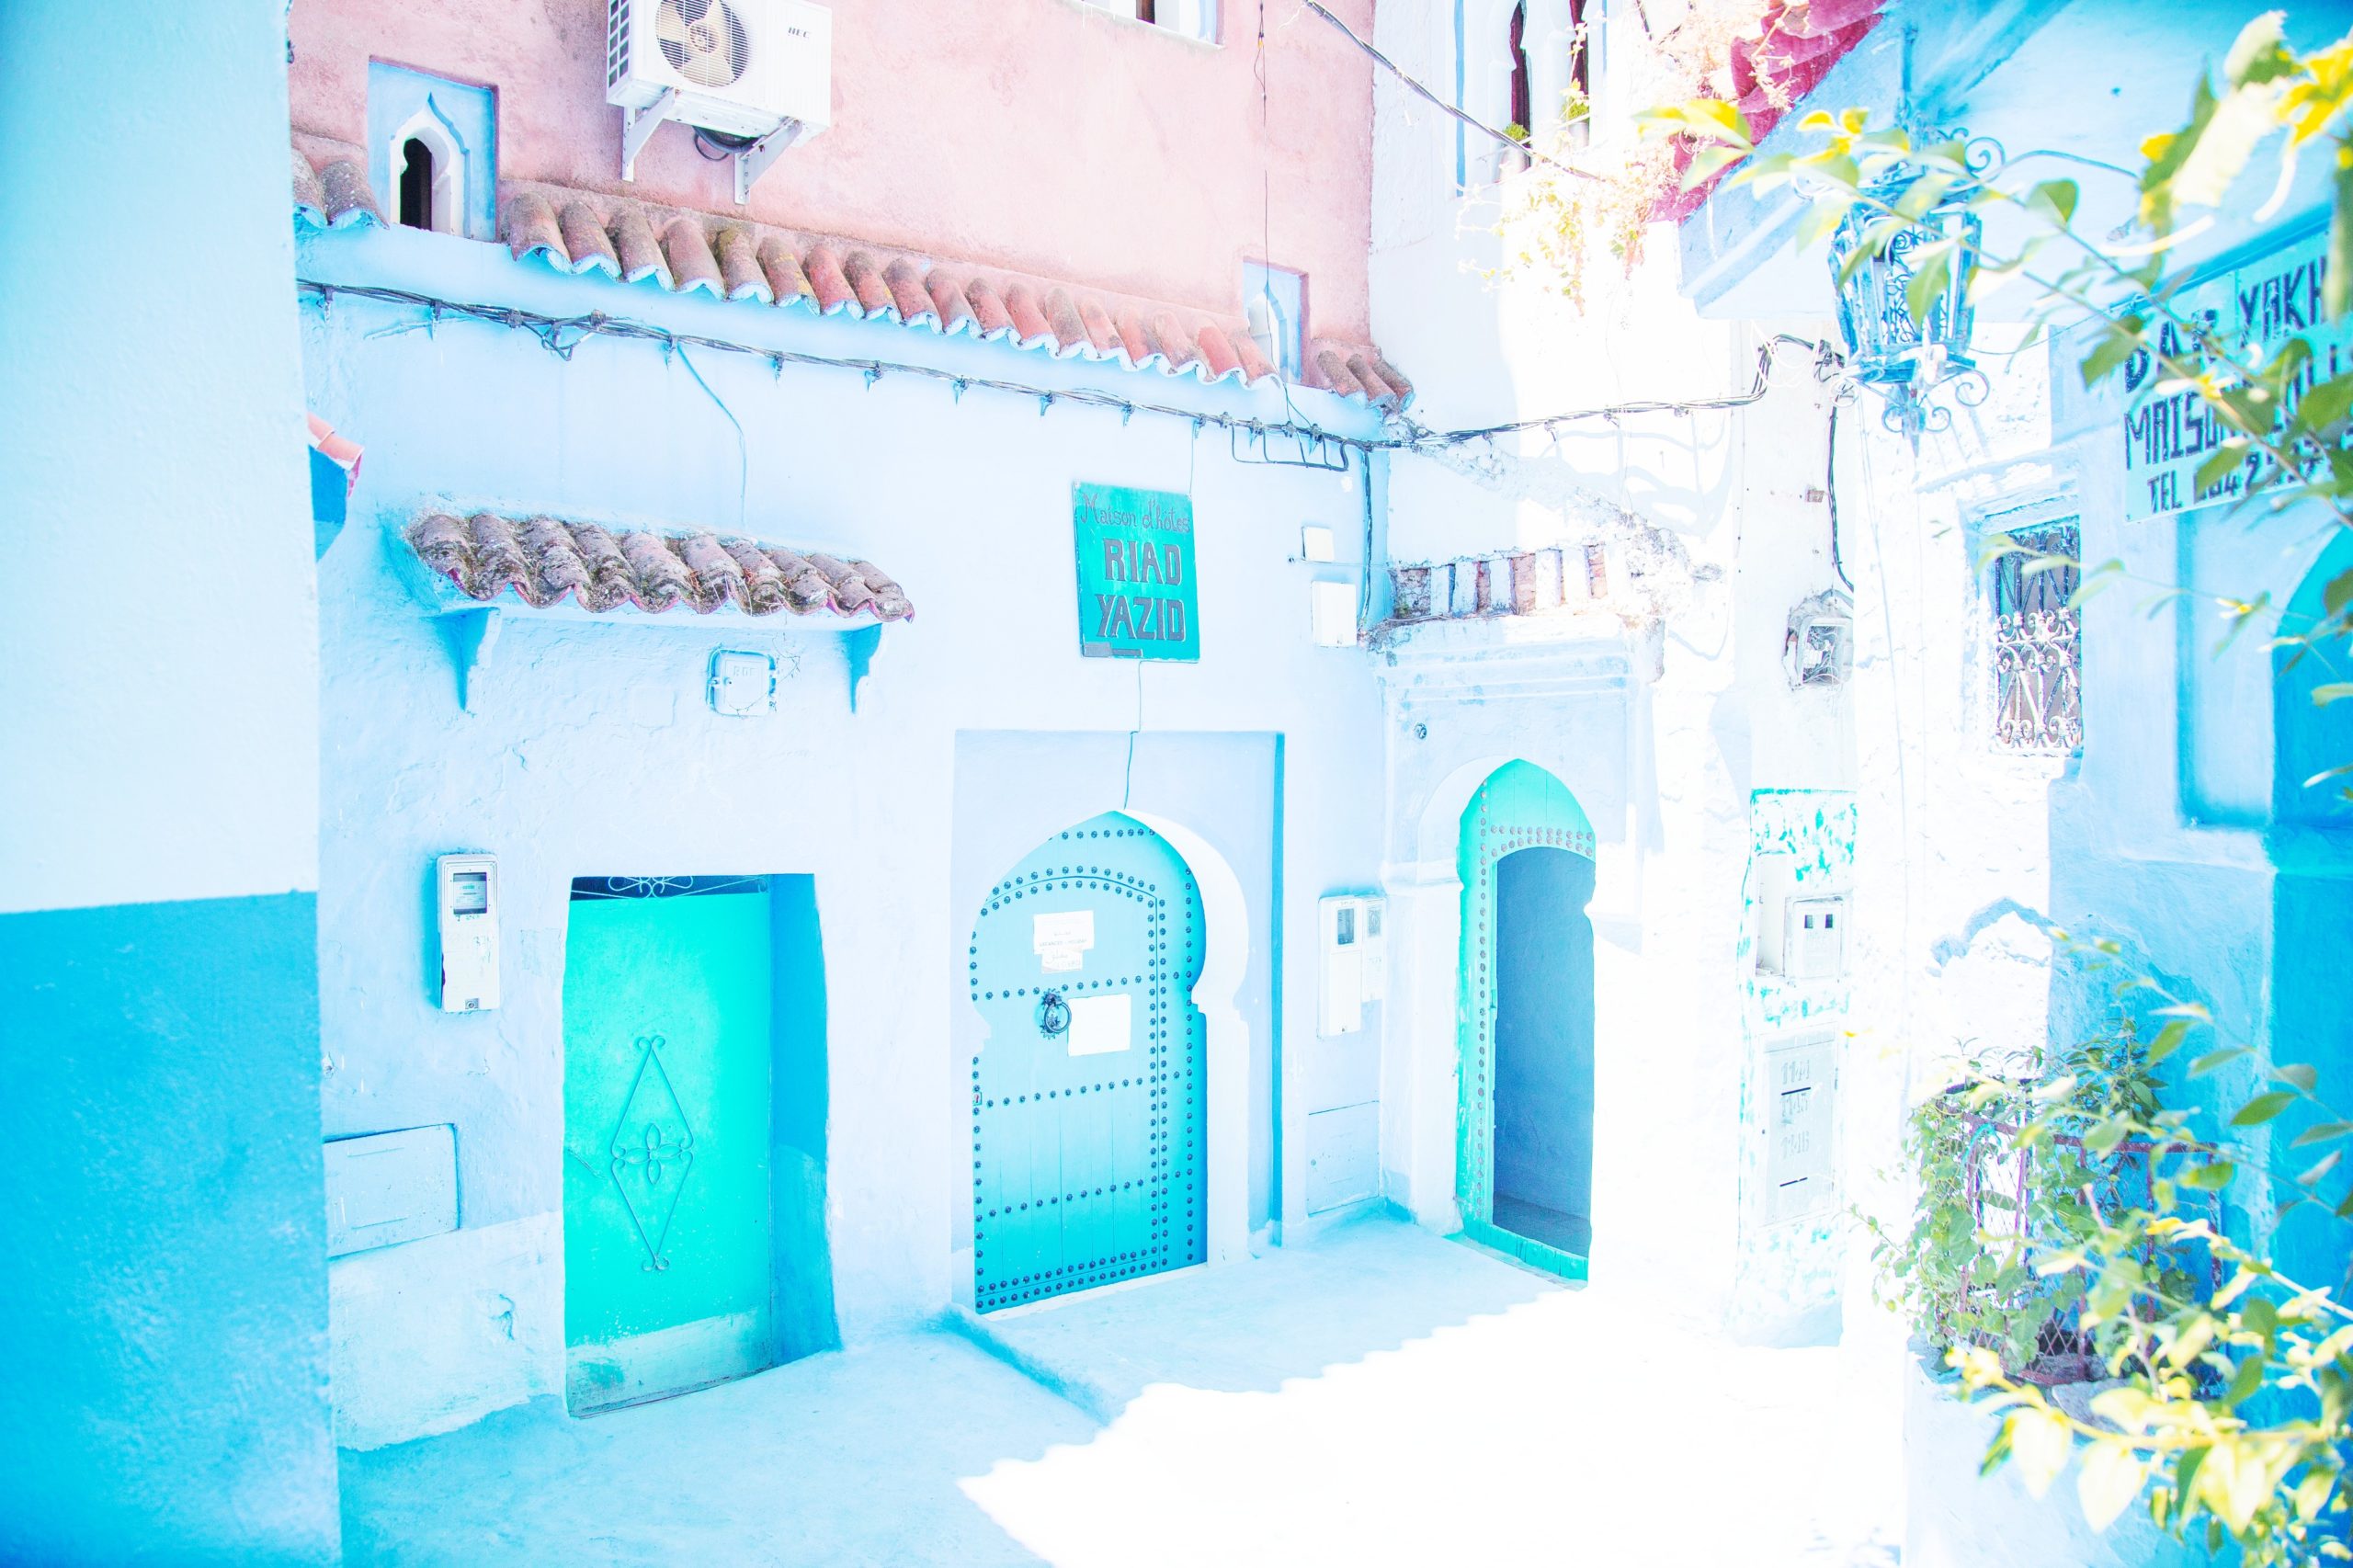 <img src="colourful.jpg" alt="colourful city of Marrakesh"/> 